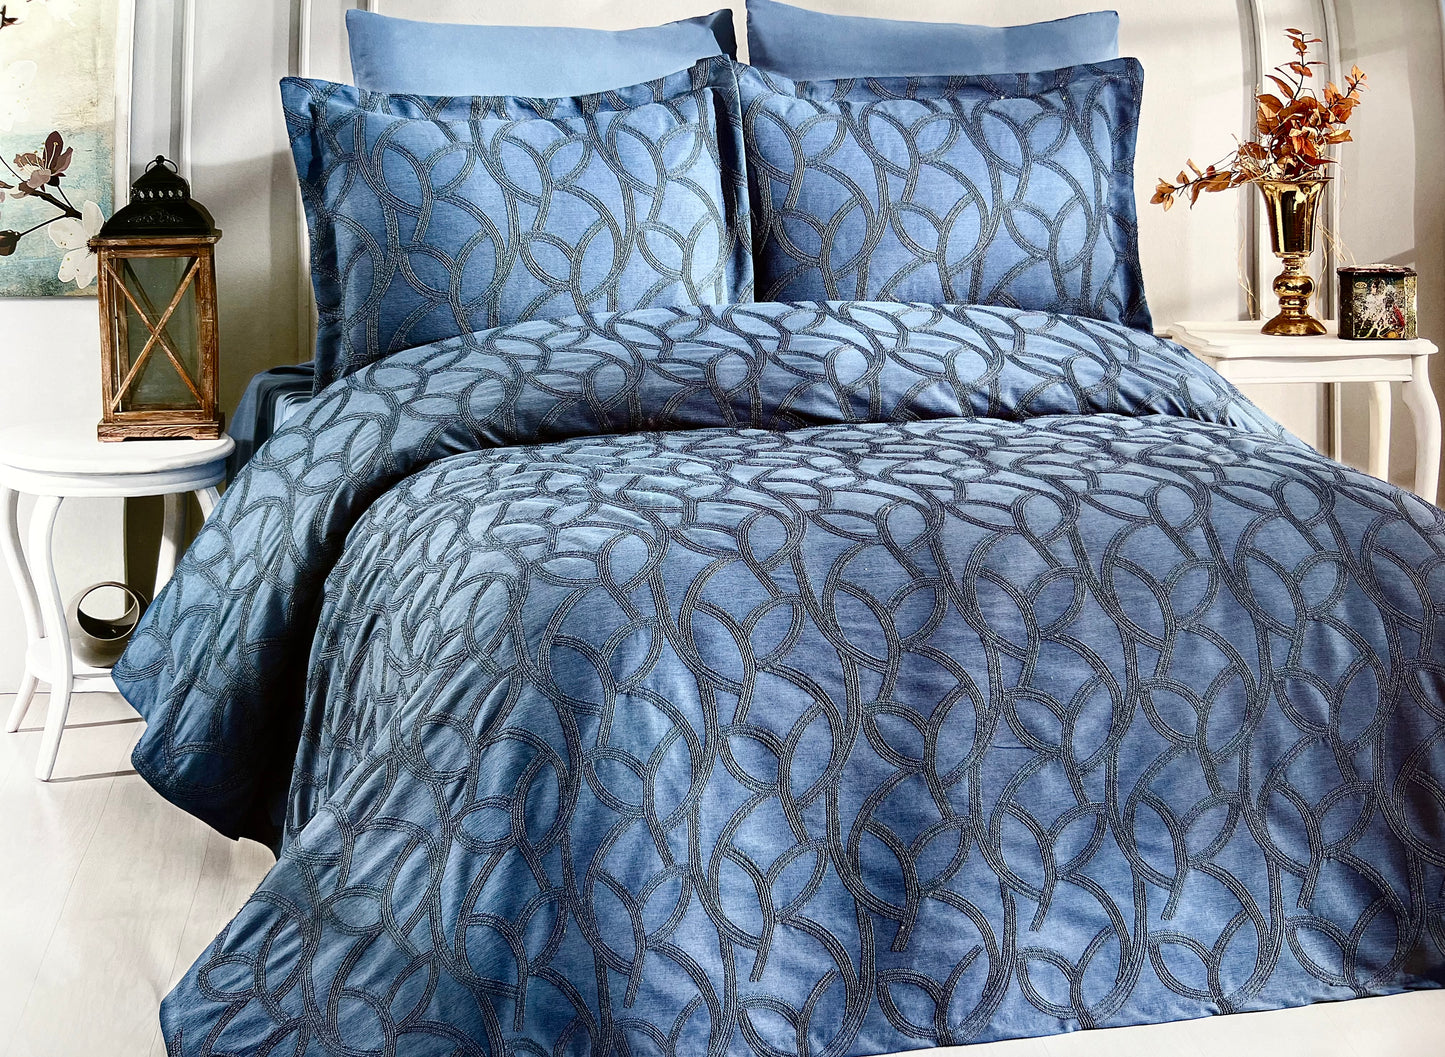 Orlo Indigo Embroidery Luxury Bedding Set